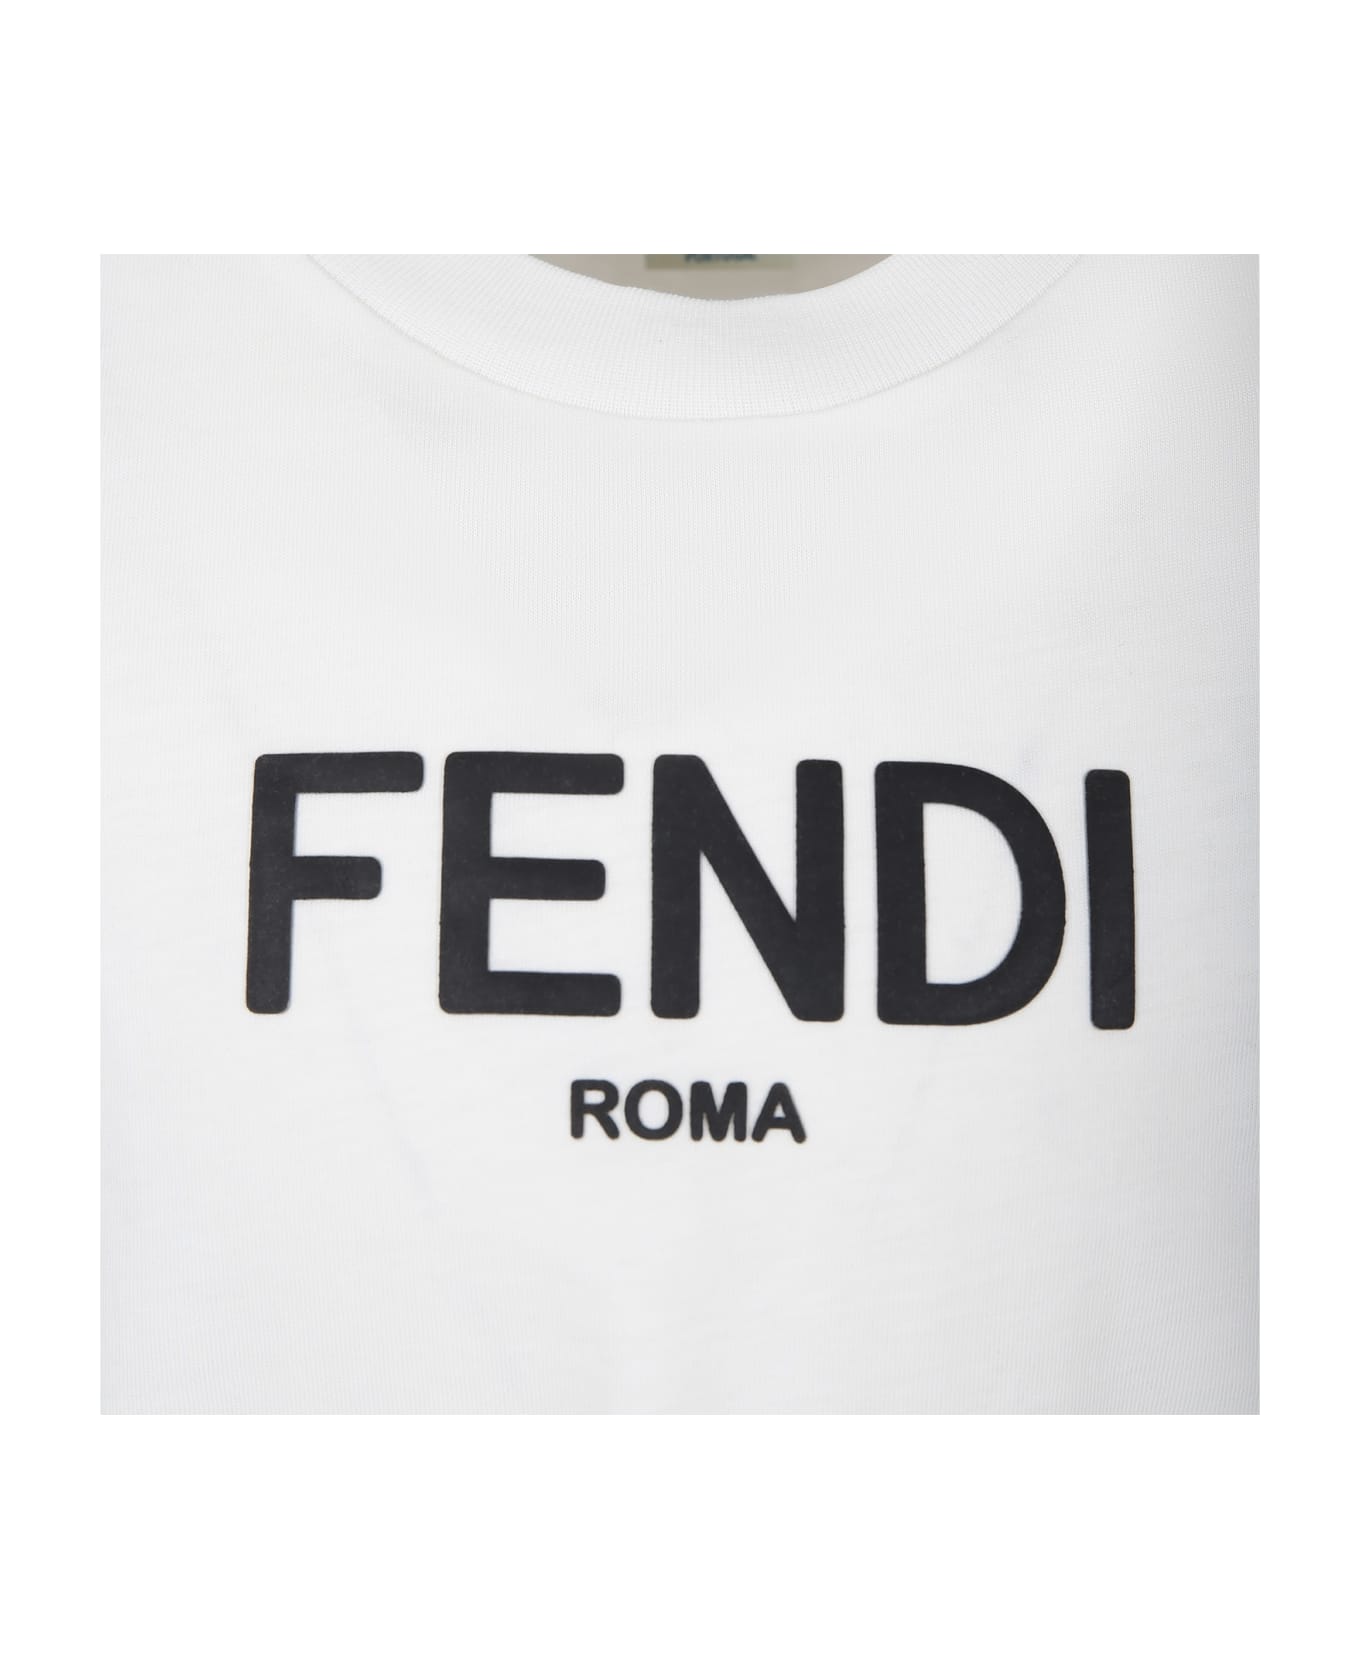 Fendi White T-shirt For Kids With Logo - White